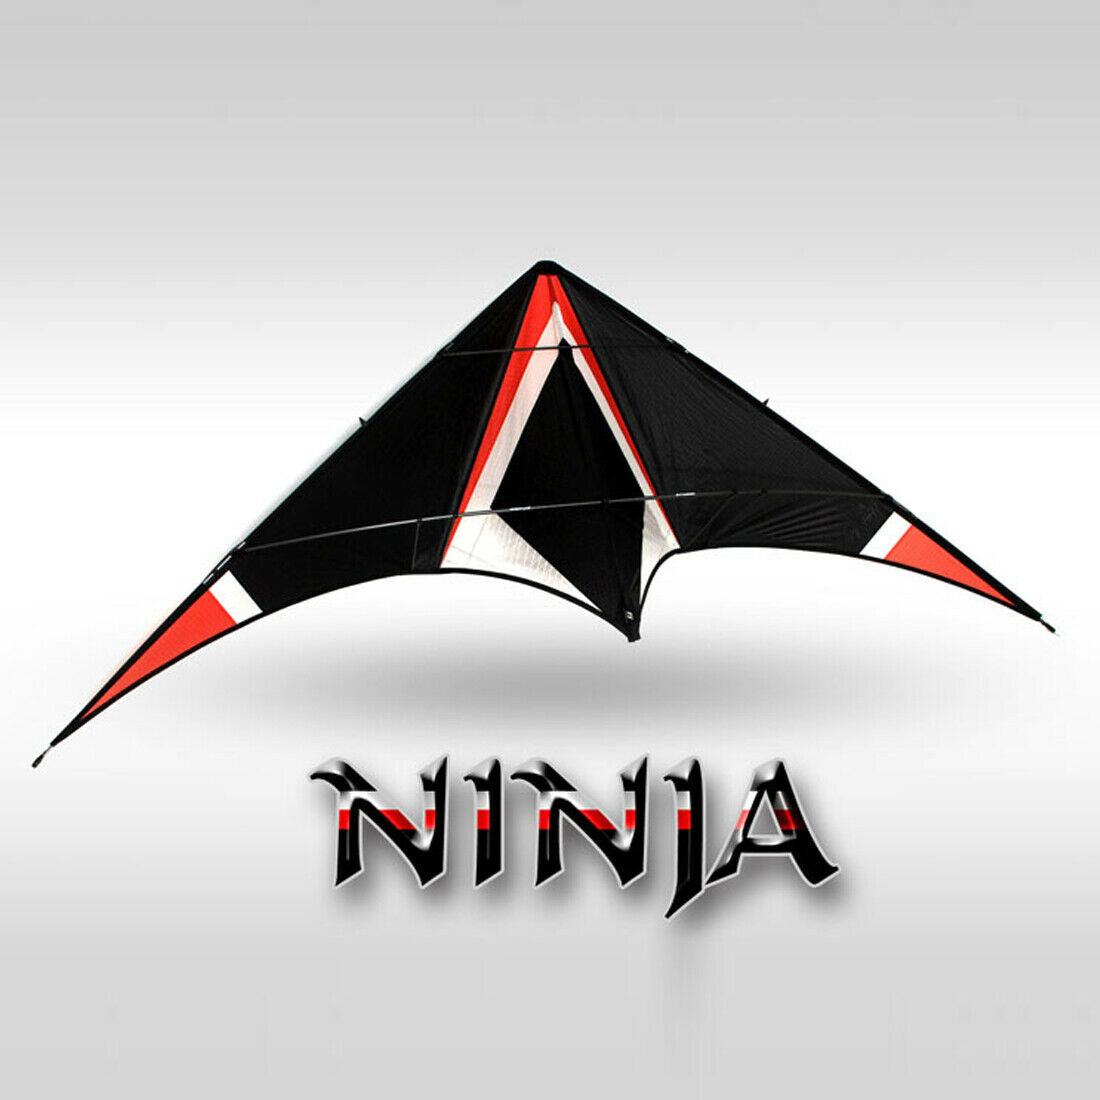 Freilein Ninja 2.36m Dual Line Stunt Kite